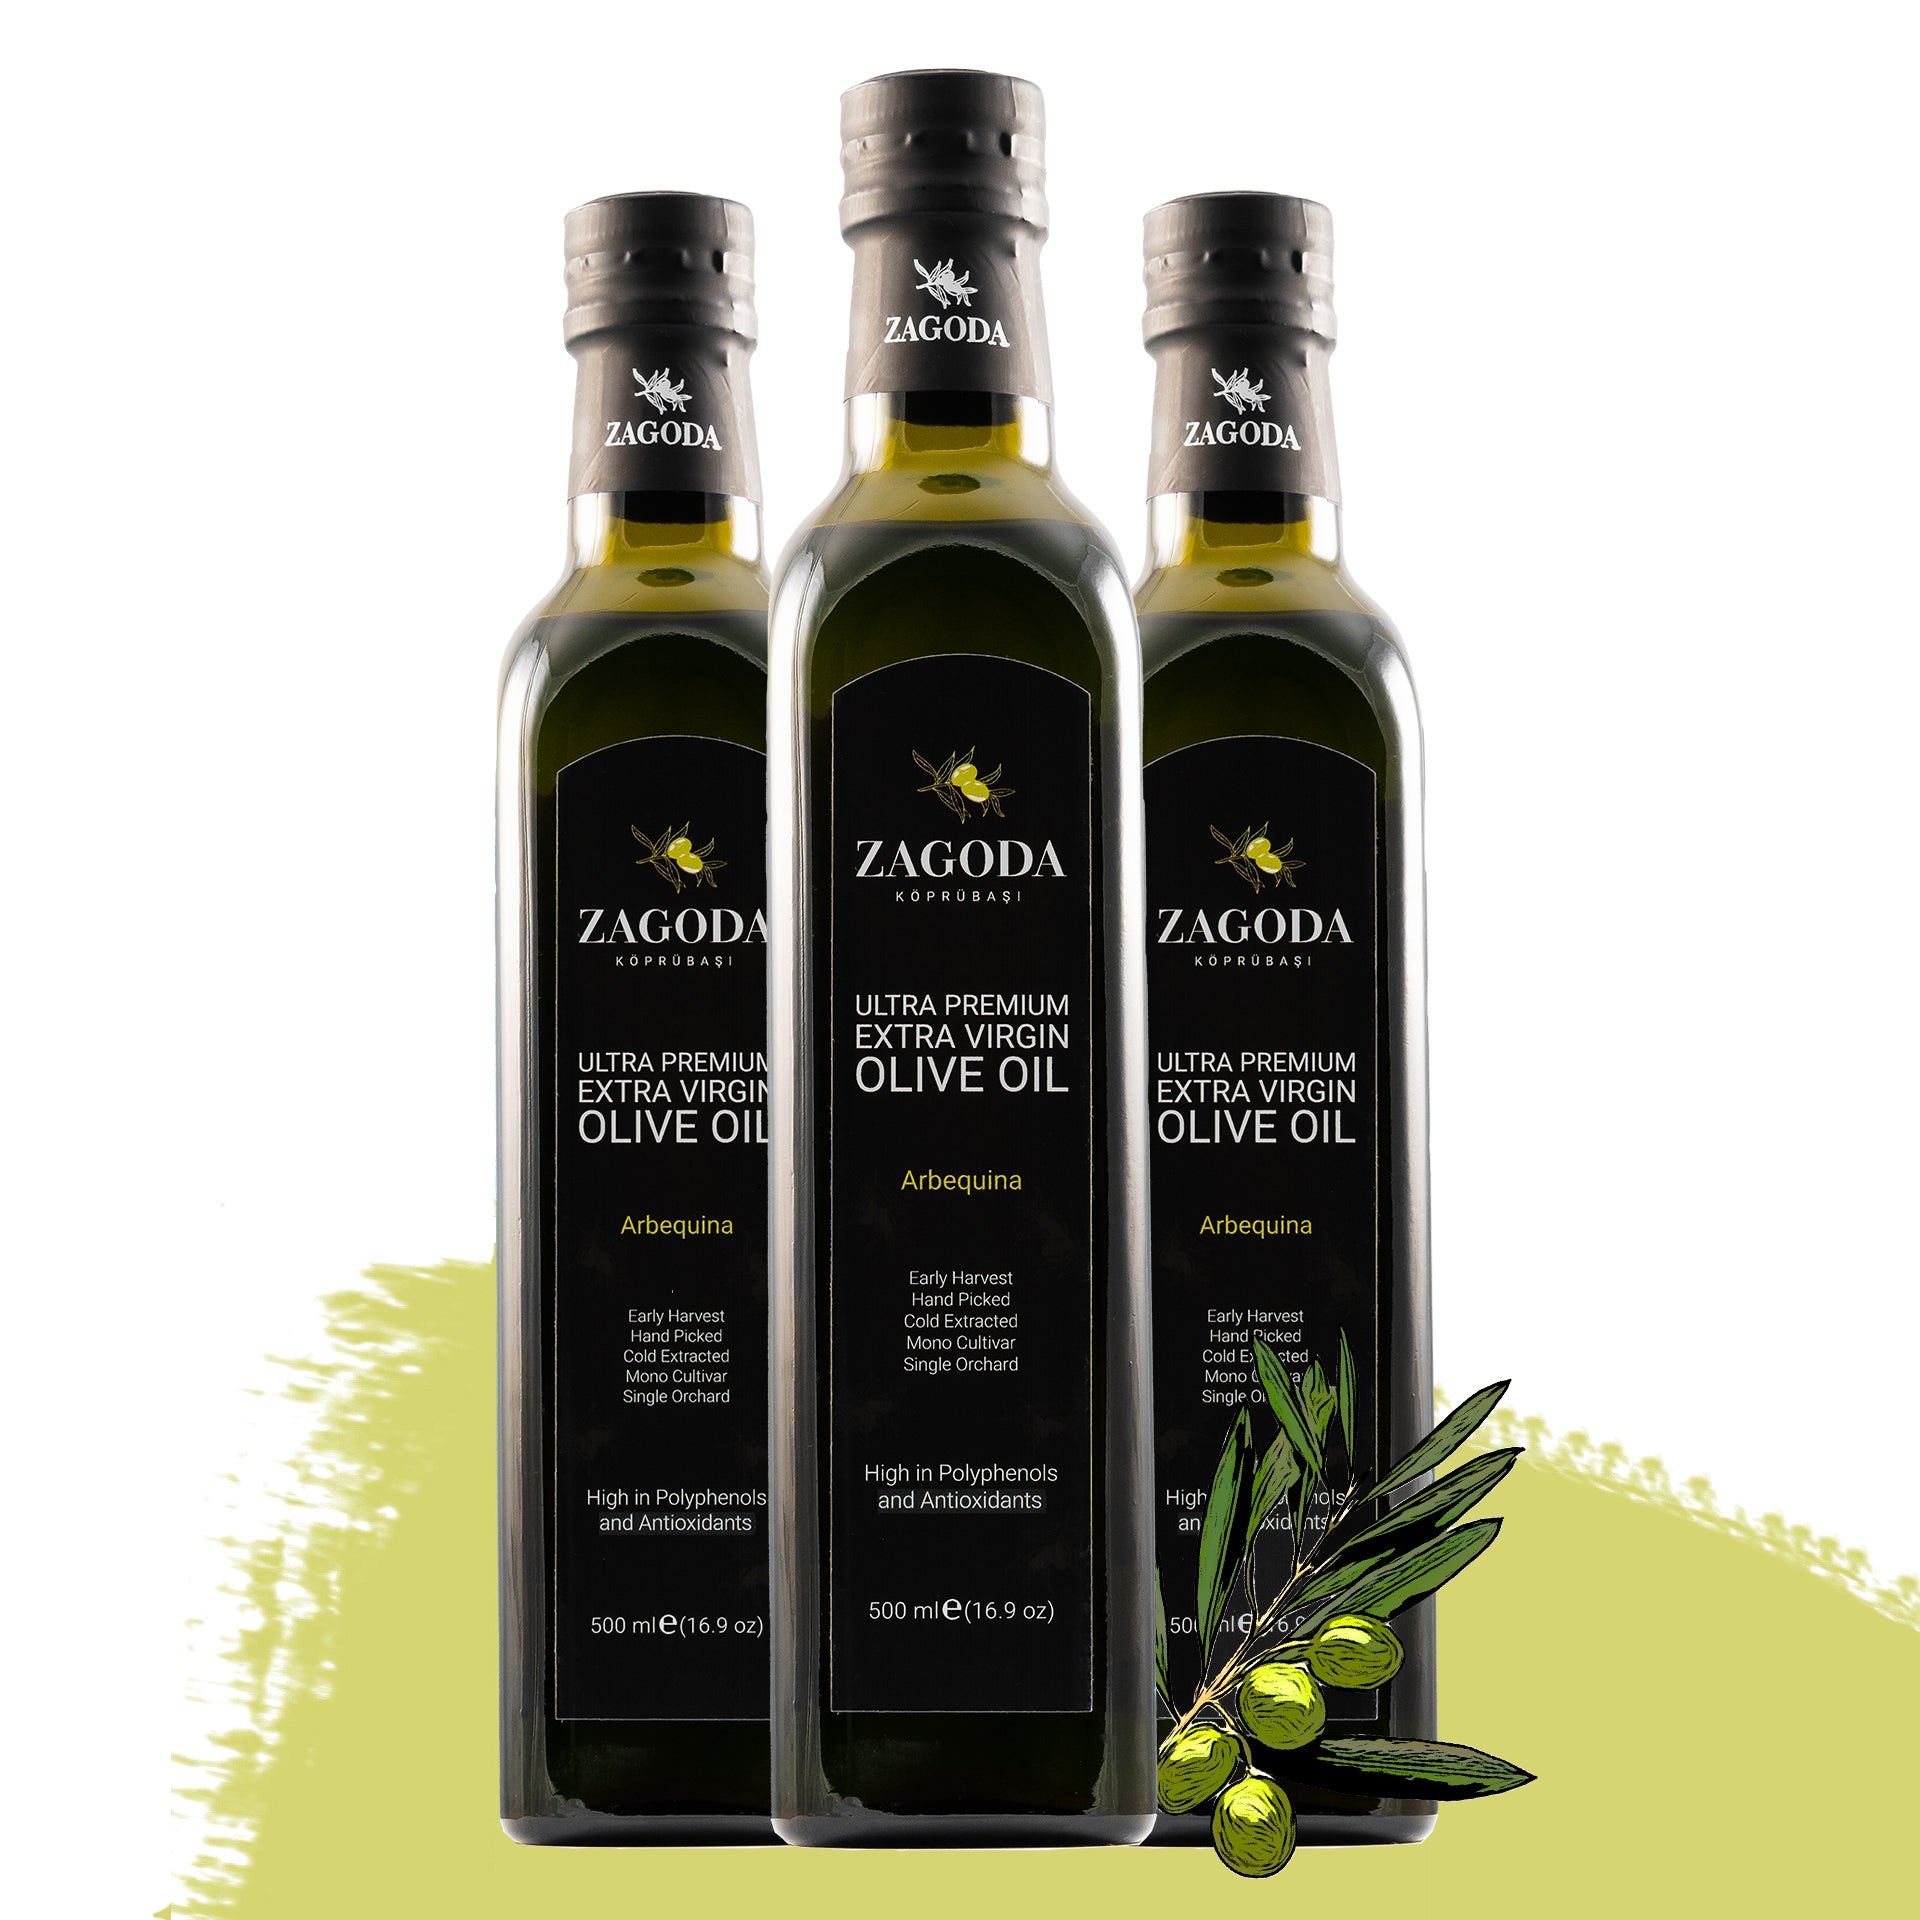 Extra Virgin Olive Oil 1L · 15 Units/Box - Olibaza S.L